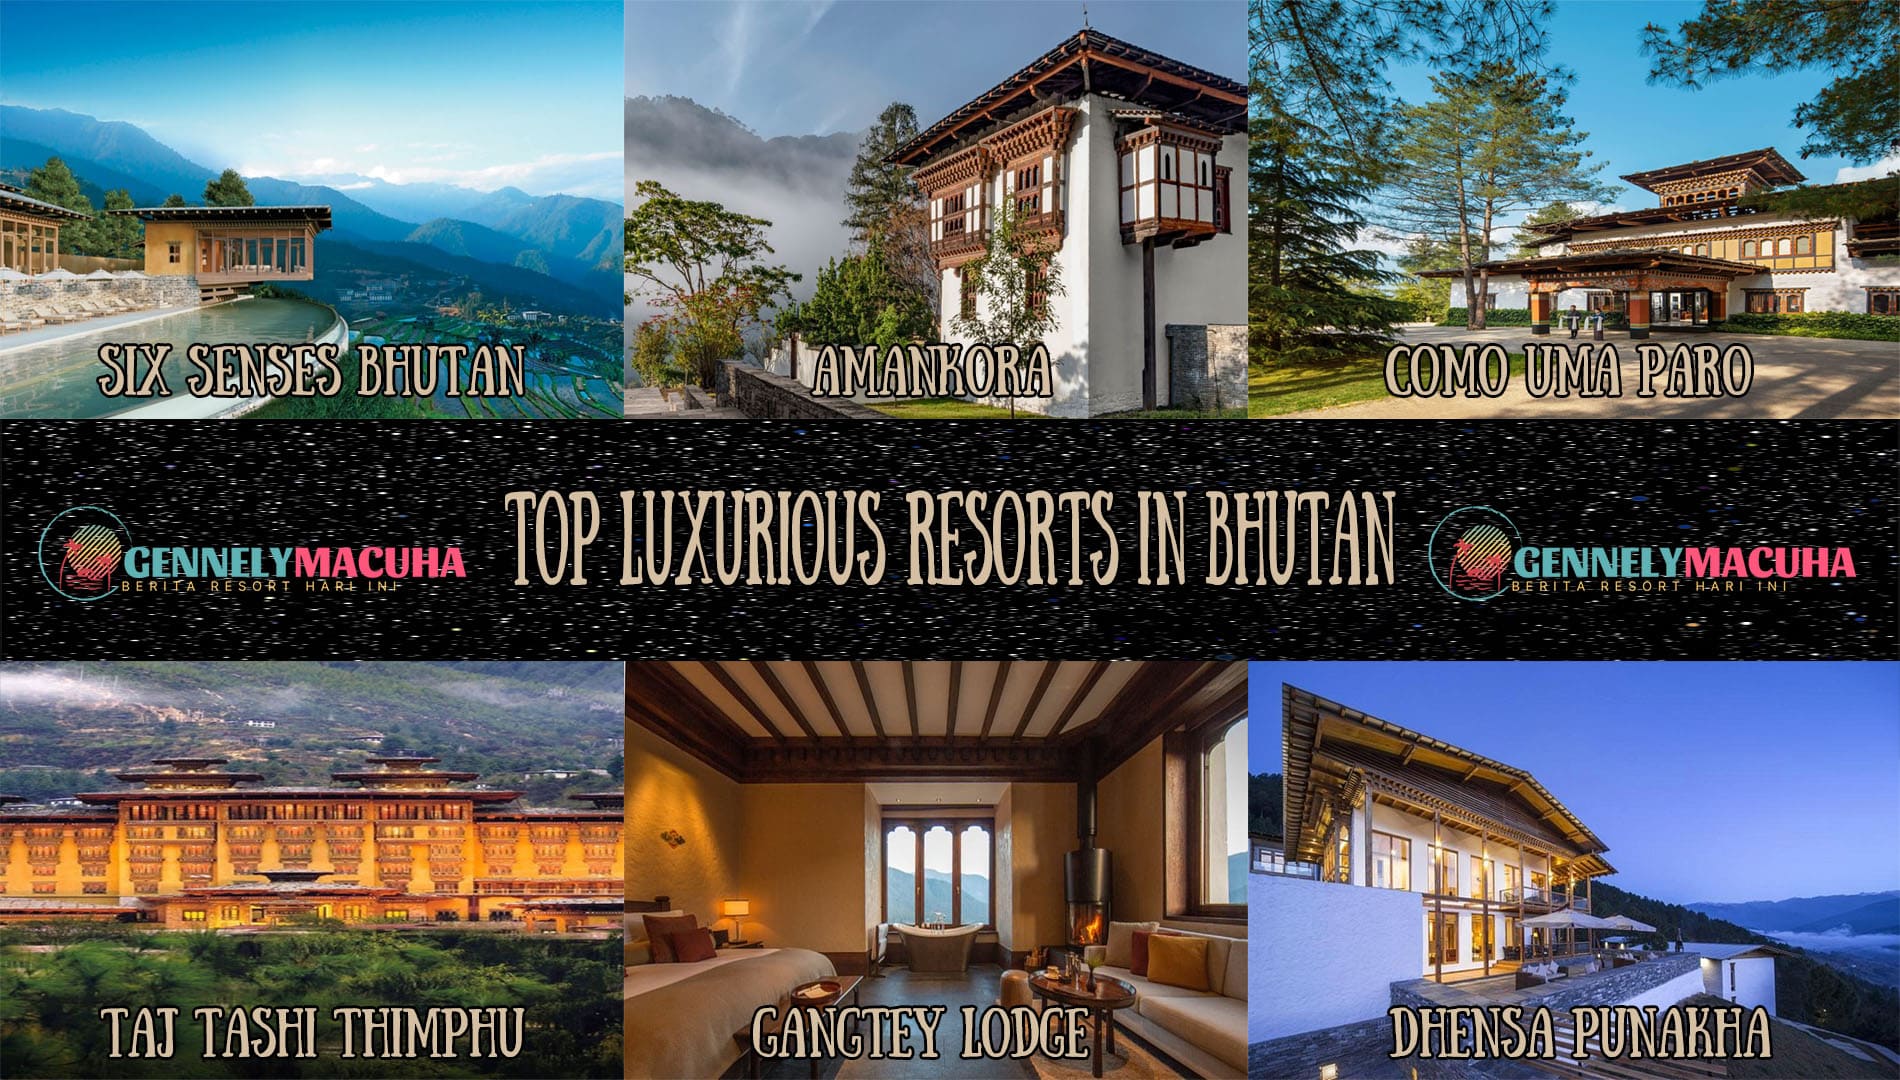 The Top Luxurious Resorts in Bhutan